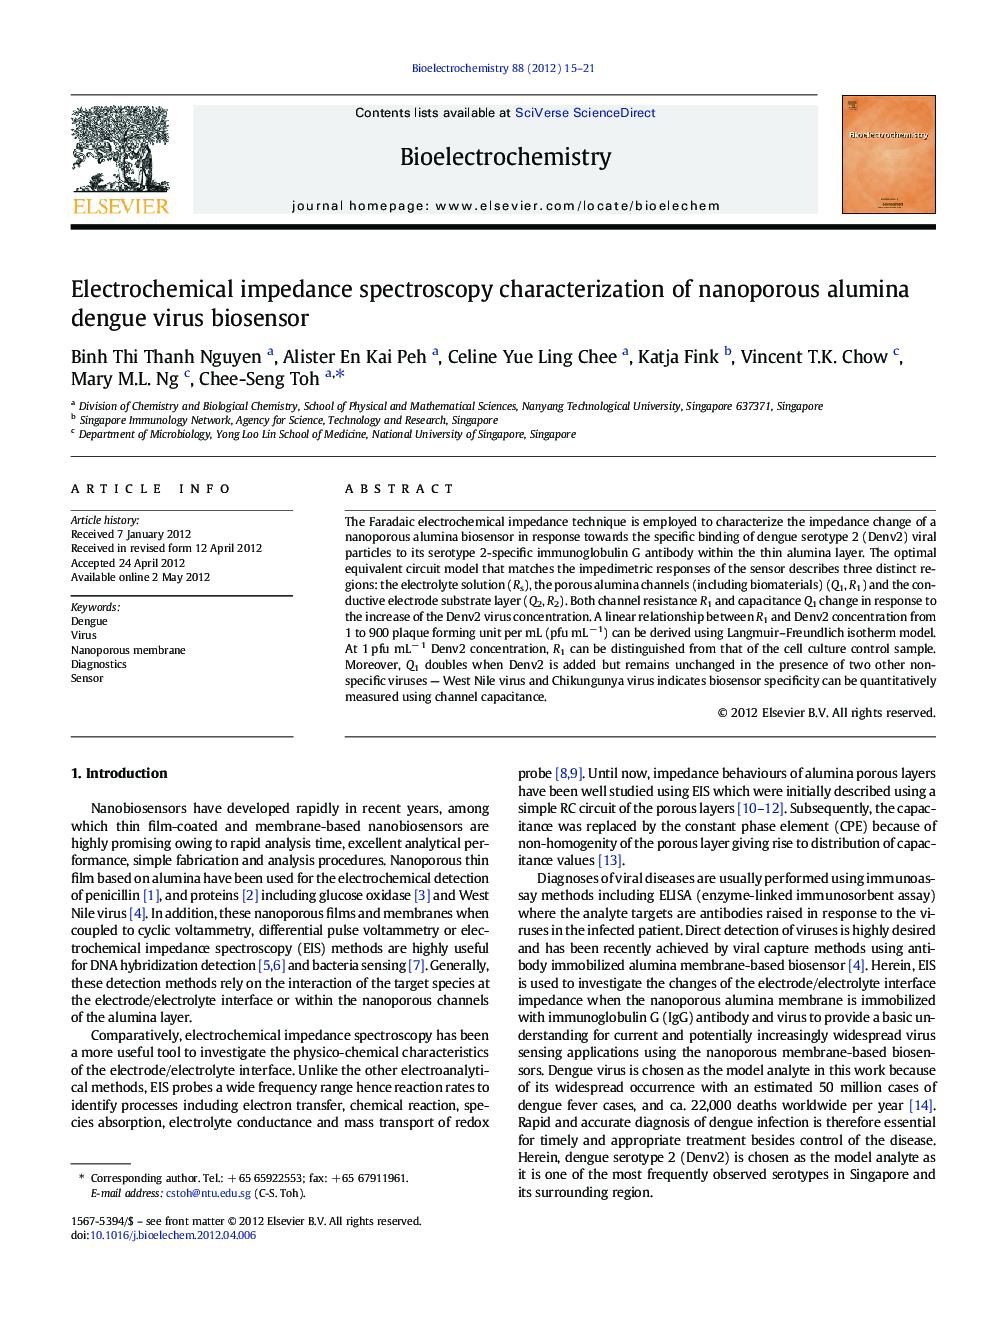 Electrochemical impedance spectroscopy characterization of nanoporous alumina dengue virus biosensor